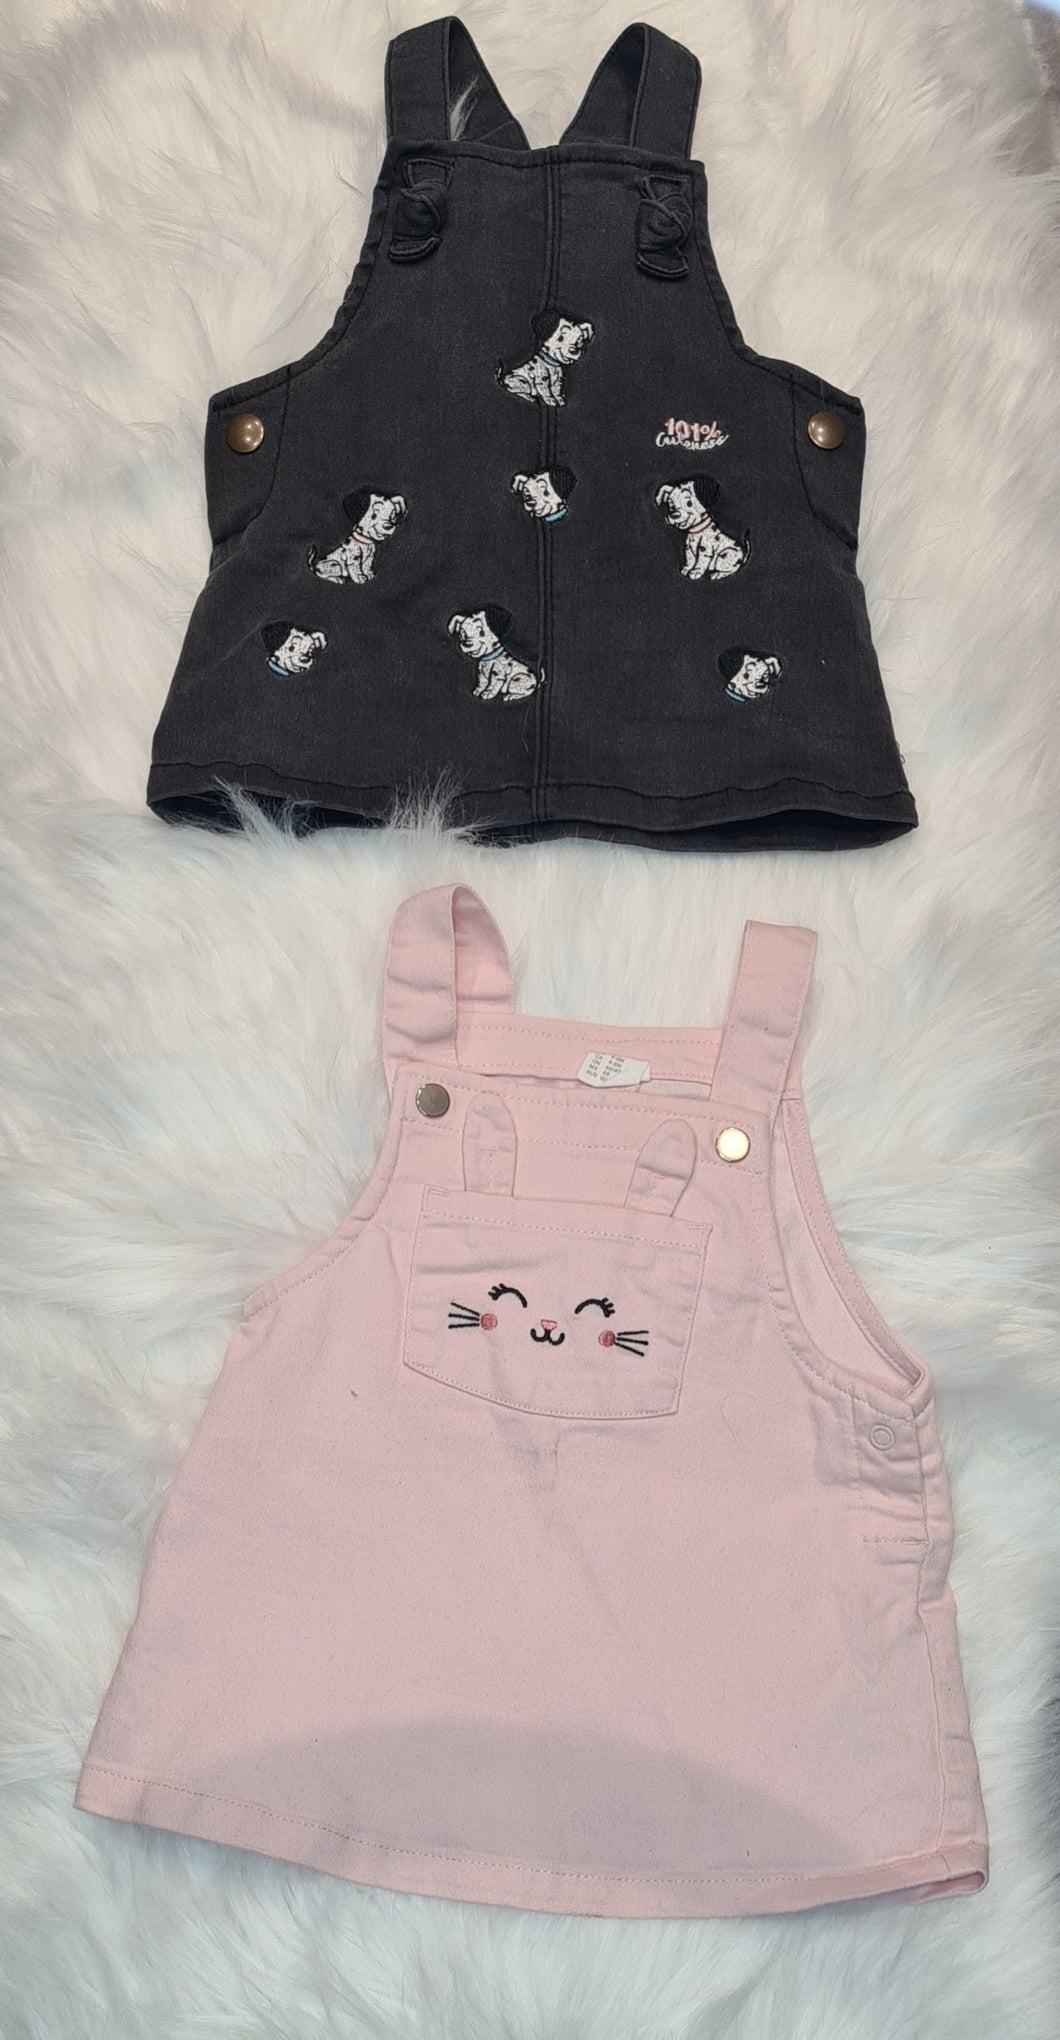 Girls 3-6 Months - 2 Dress Set - Disney/101 Dalmatians and Bunny